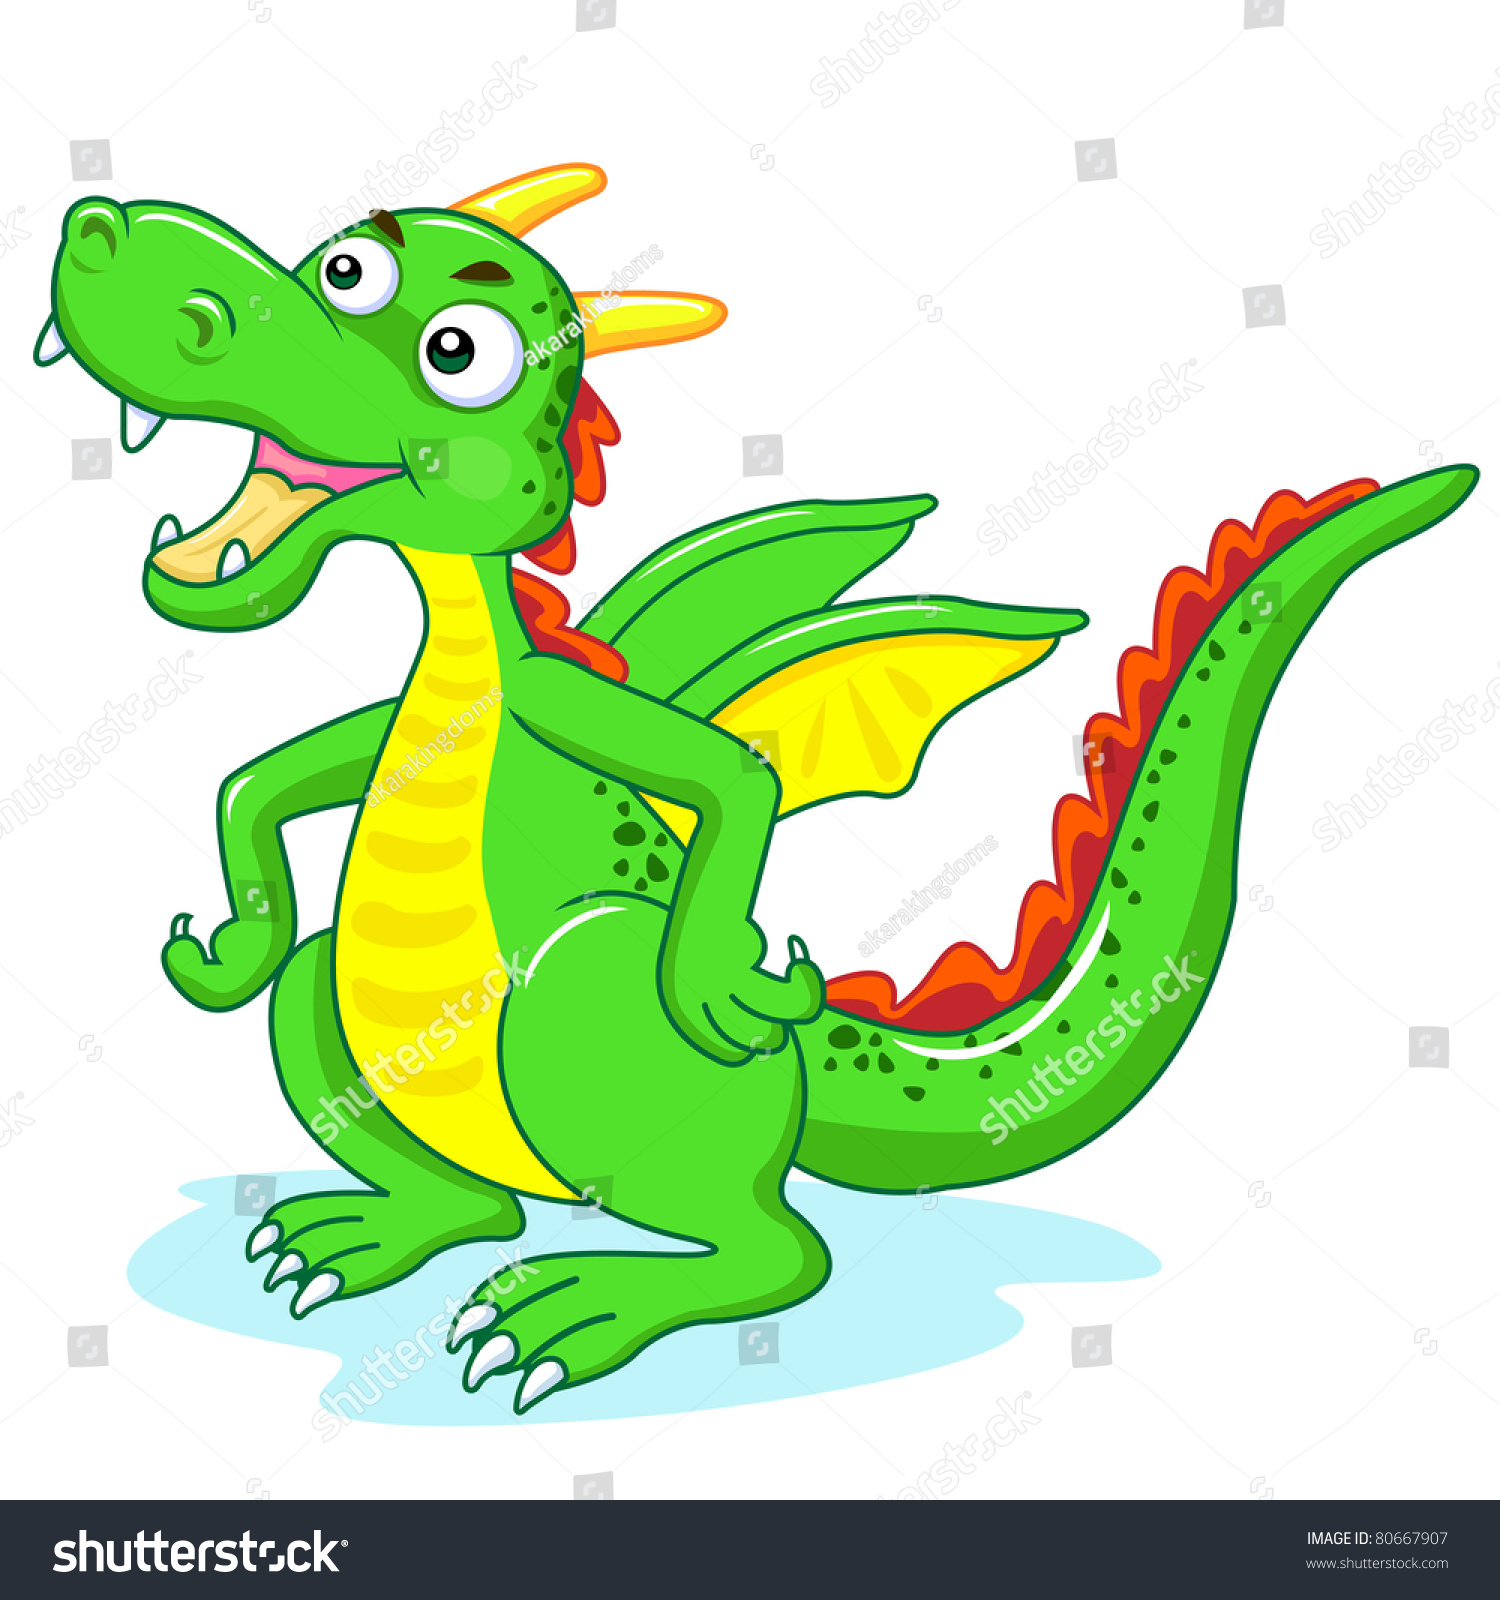 stock-vector-the-dragon-cartoon-for-kids